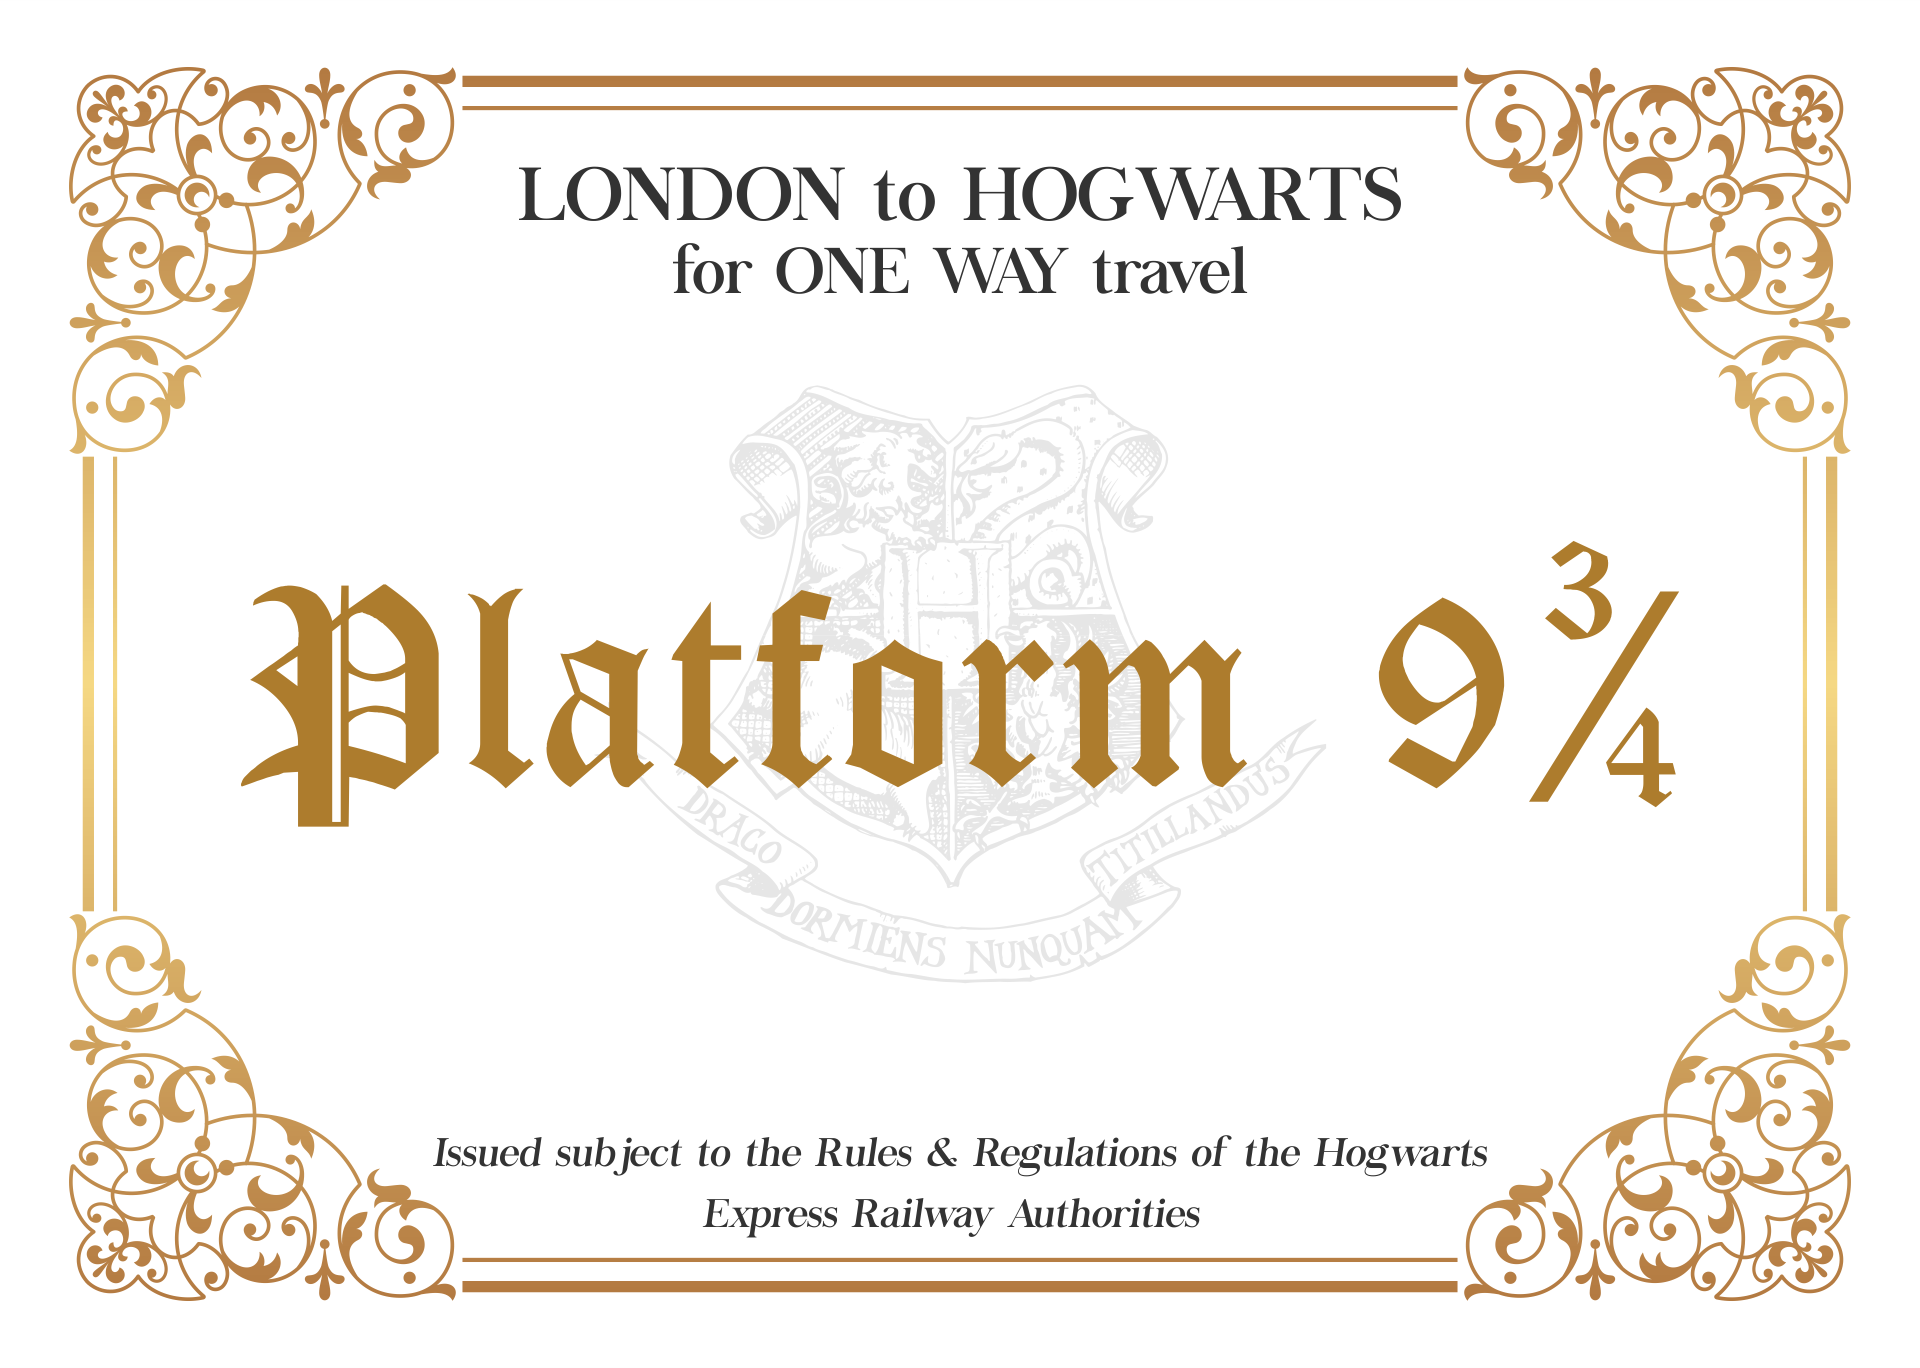 Harry Potter Platform 9 3 4 Ticket